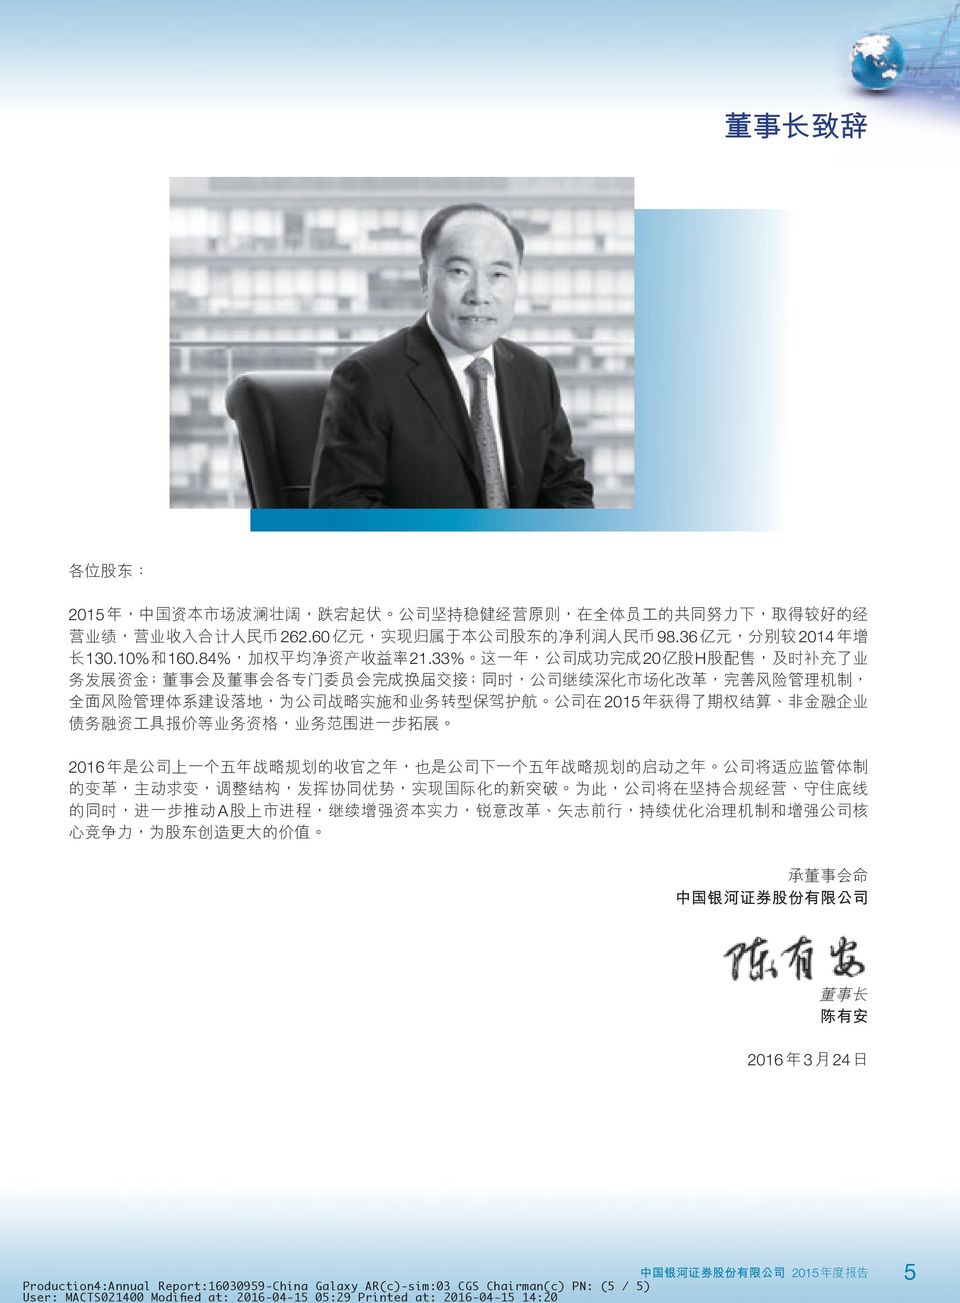 Report:16030959-China Galaxy AR(c)-sim:03 CGS Chairman(c)